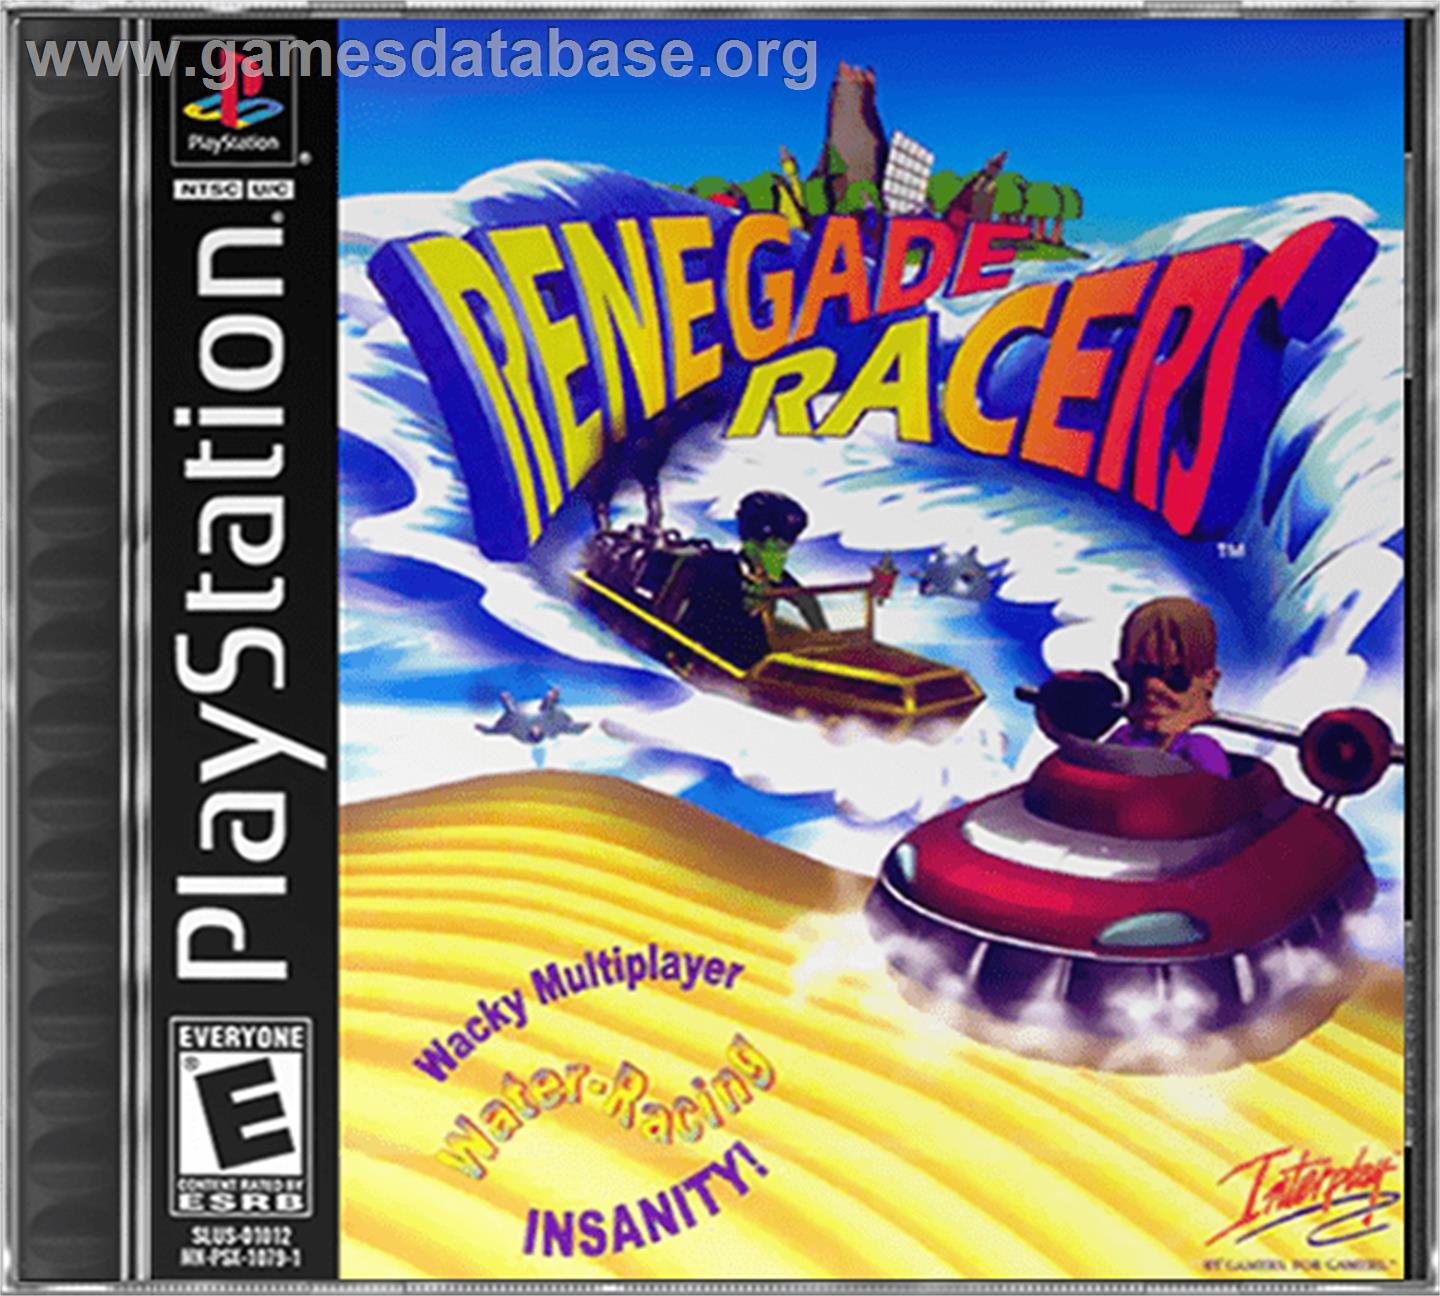 Renegade Racers - Sony Playstation - Artwork - Box